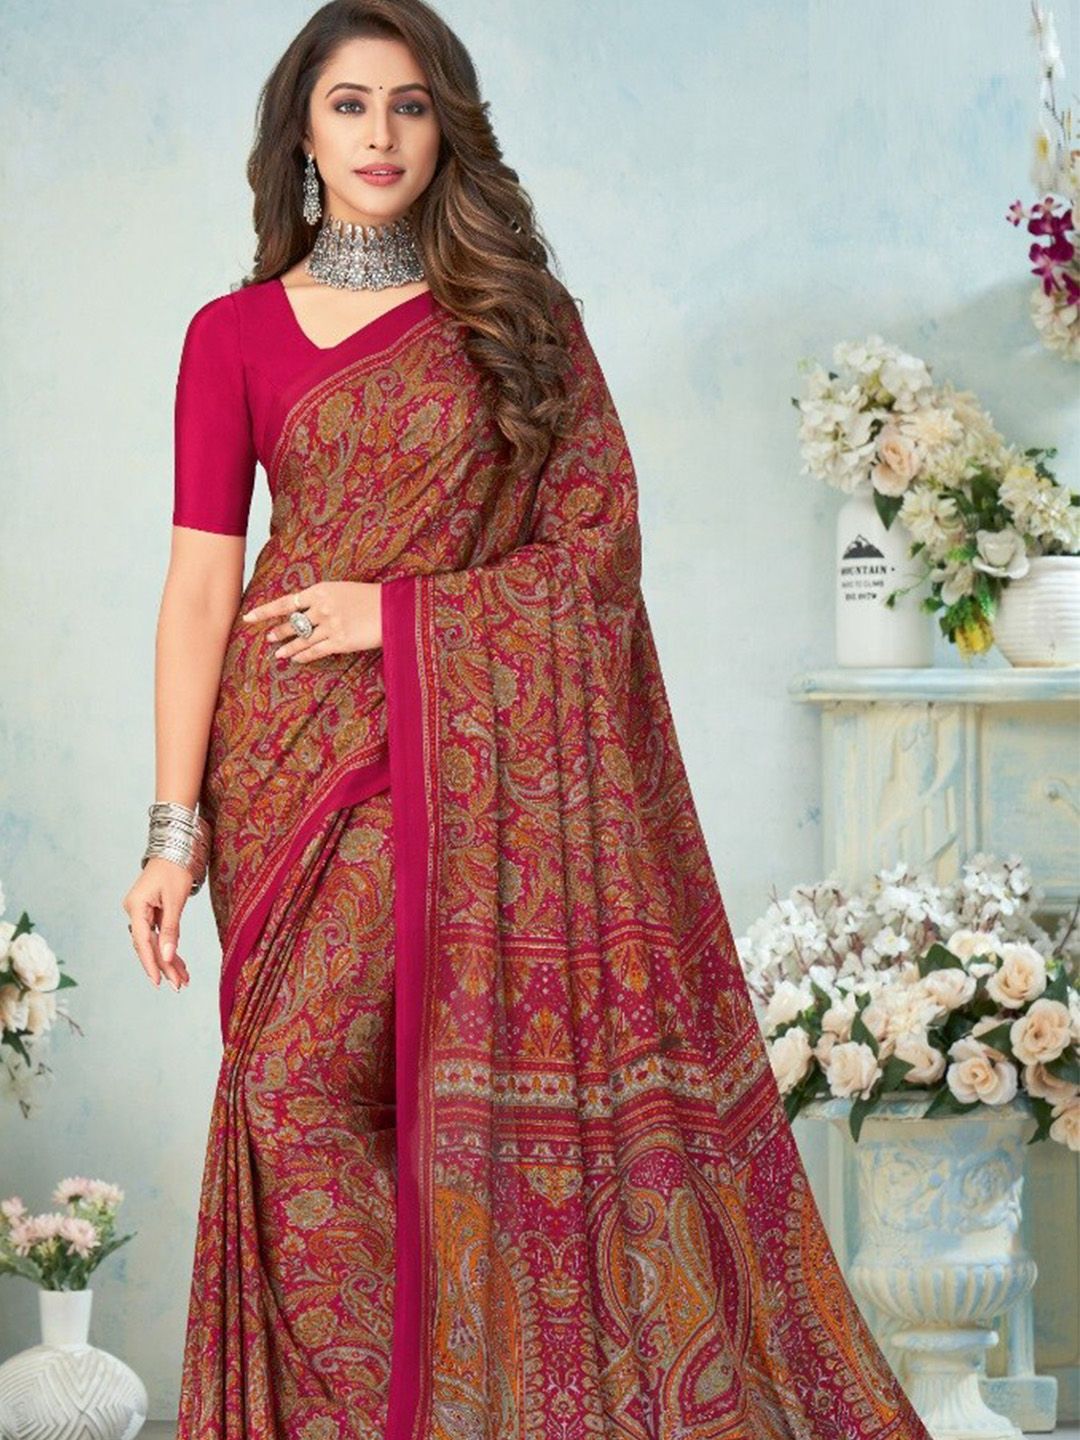 Reboot Fashions Ethnic Motifs Printed Crepe Silk Saree Price in India